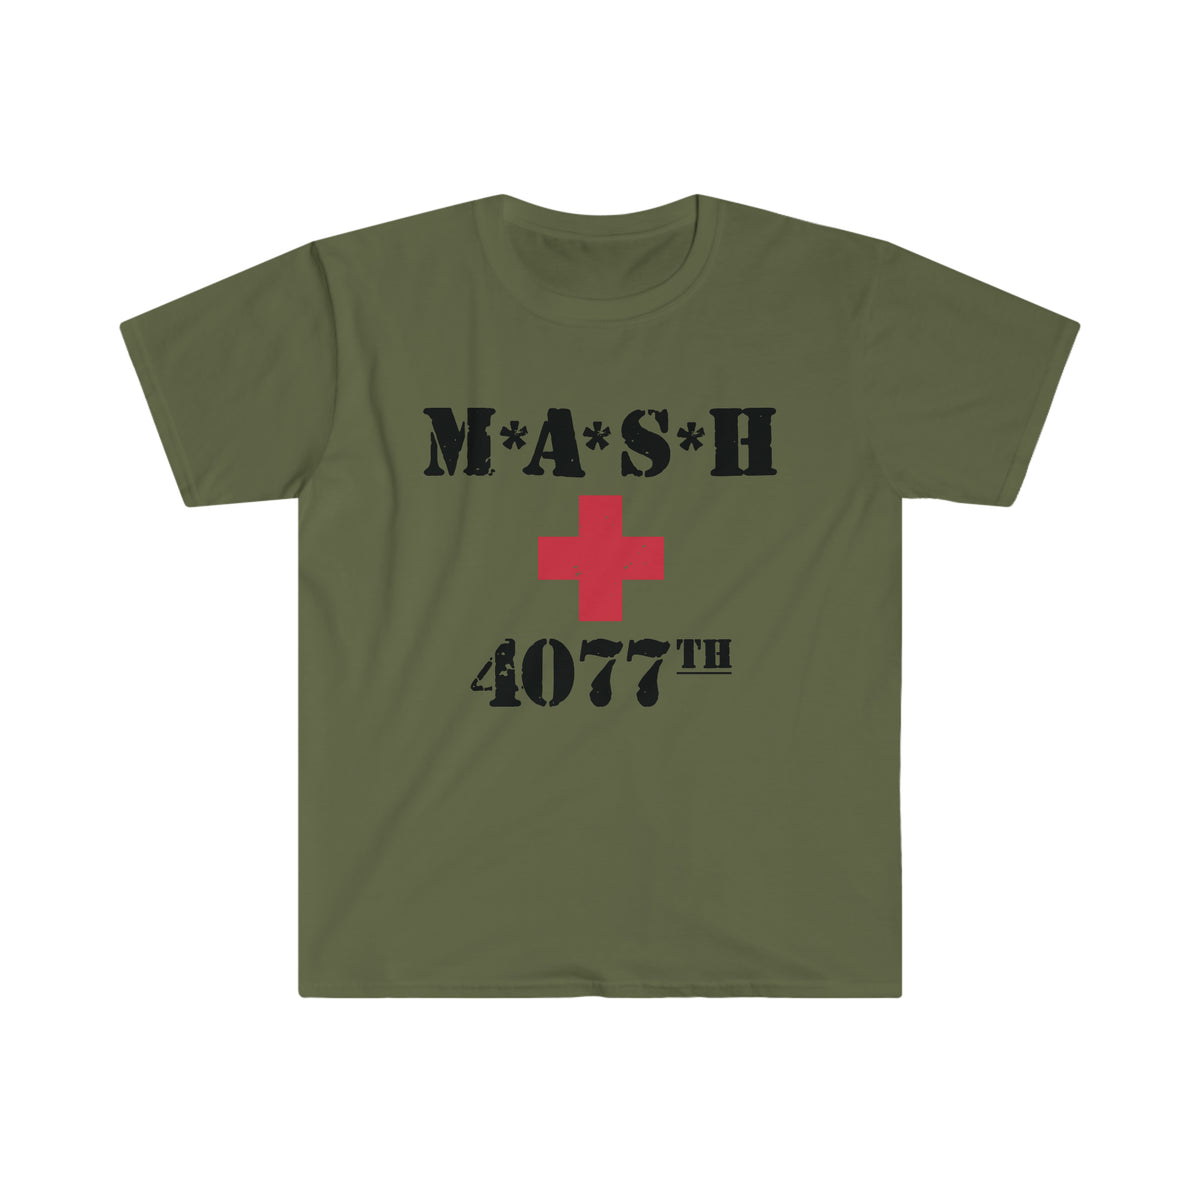 MASH 4077th Division TV Show Retro Shirt | Korean War Vintage T-shirt | Unisex Soft Style T-Shirt